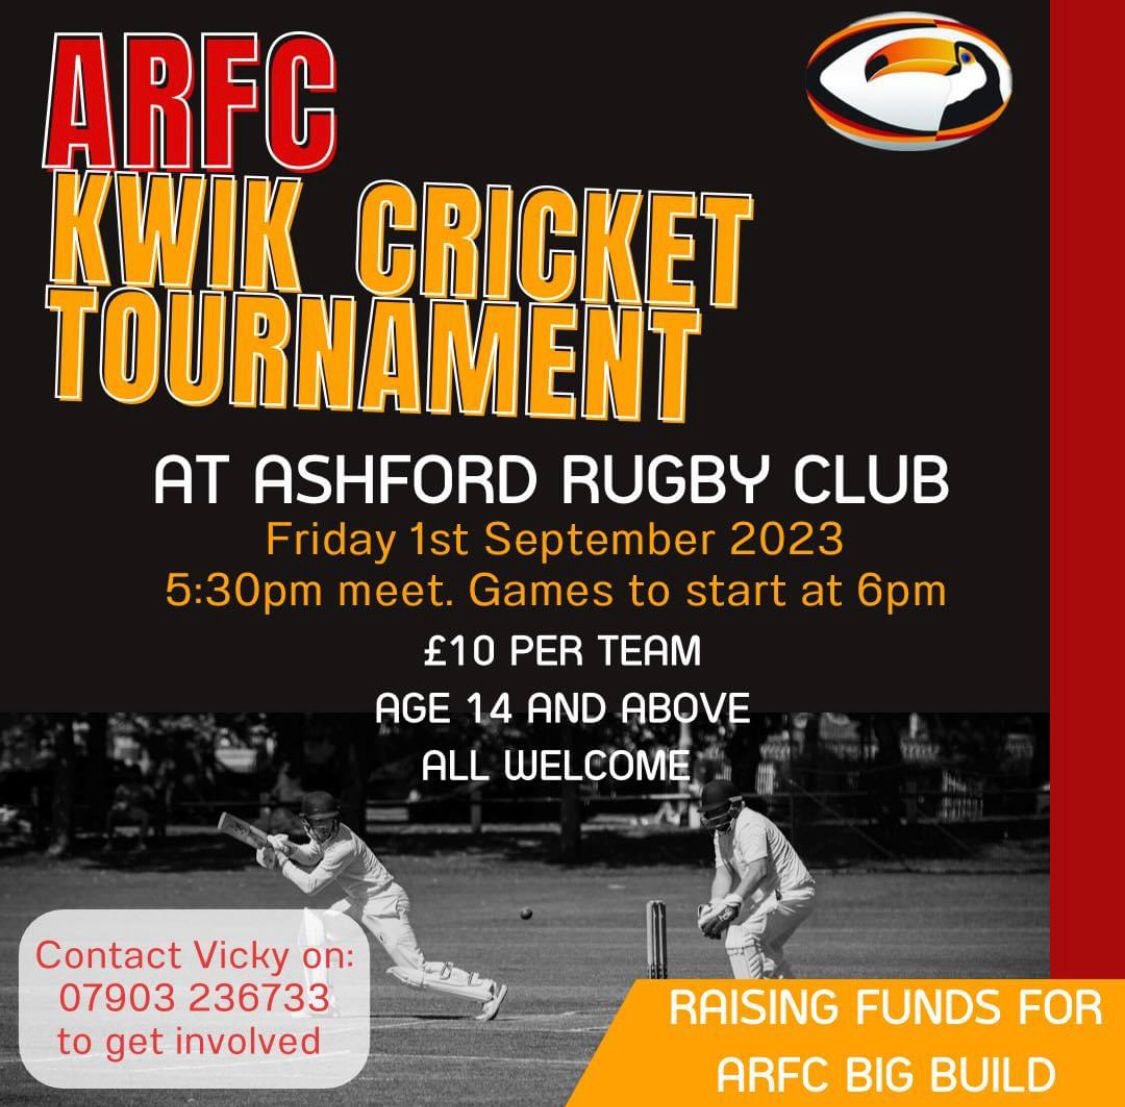 Get involved 🏉 

@AshfordRugby 

#rugby #ashford #kentrugby